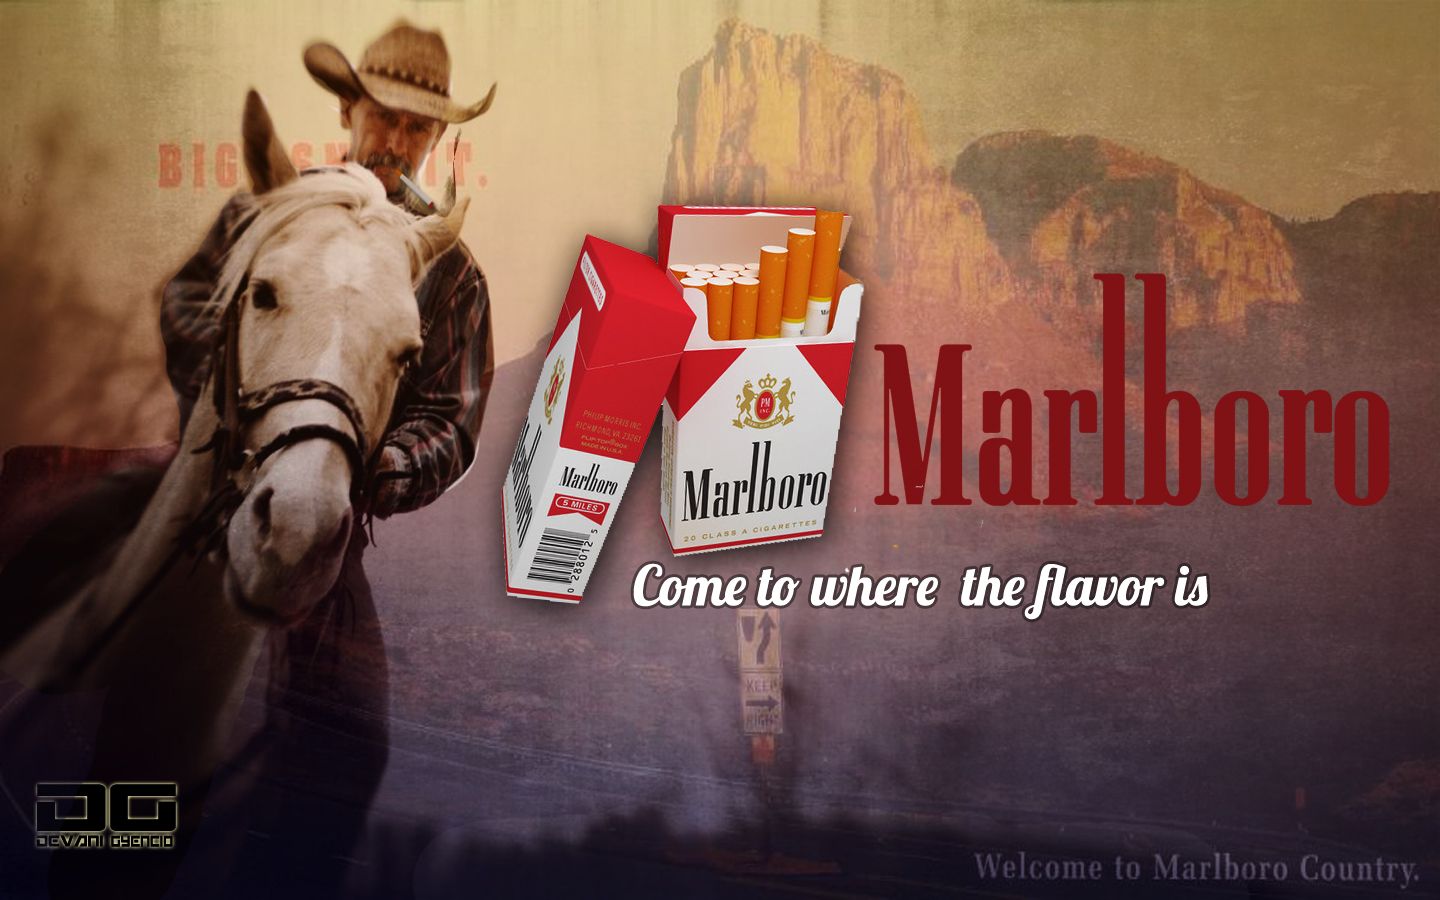 Marlboro come to where the flavor is by Gyencio on DeviantArt